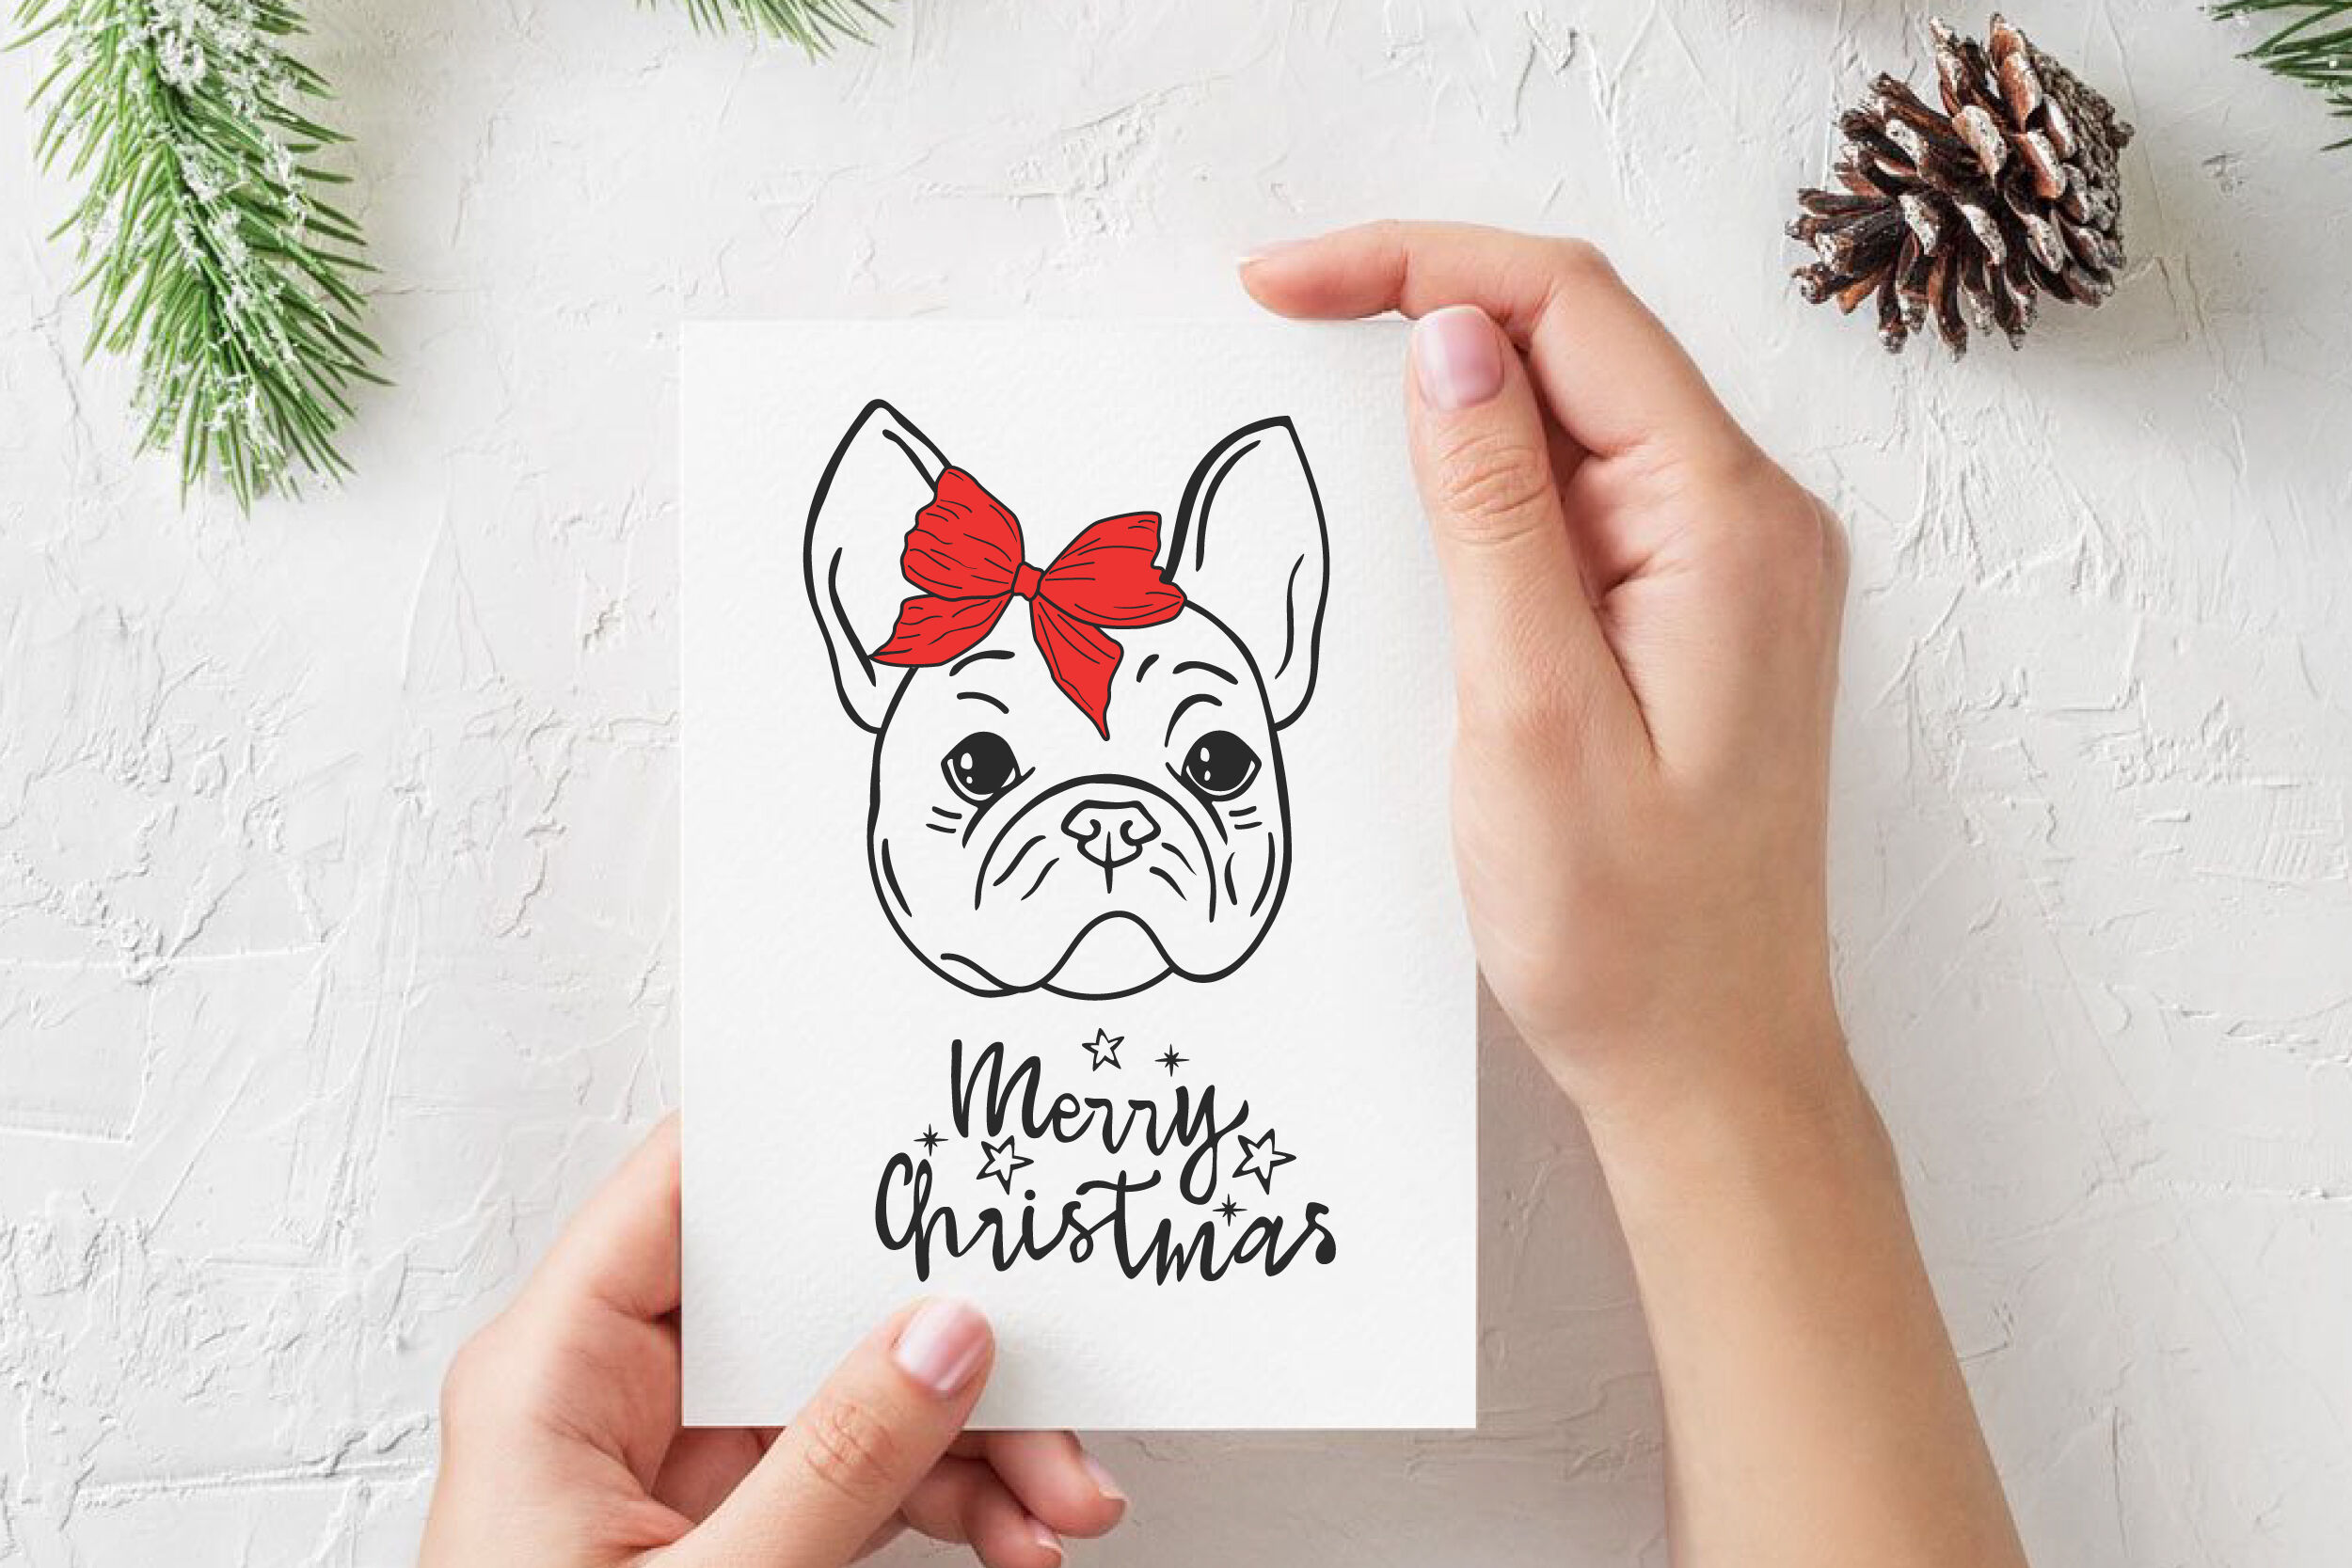 French bulldog / Christmas card with dog / billdog svg By SashaAuzaShop